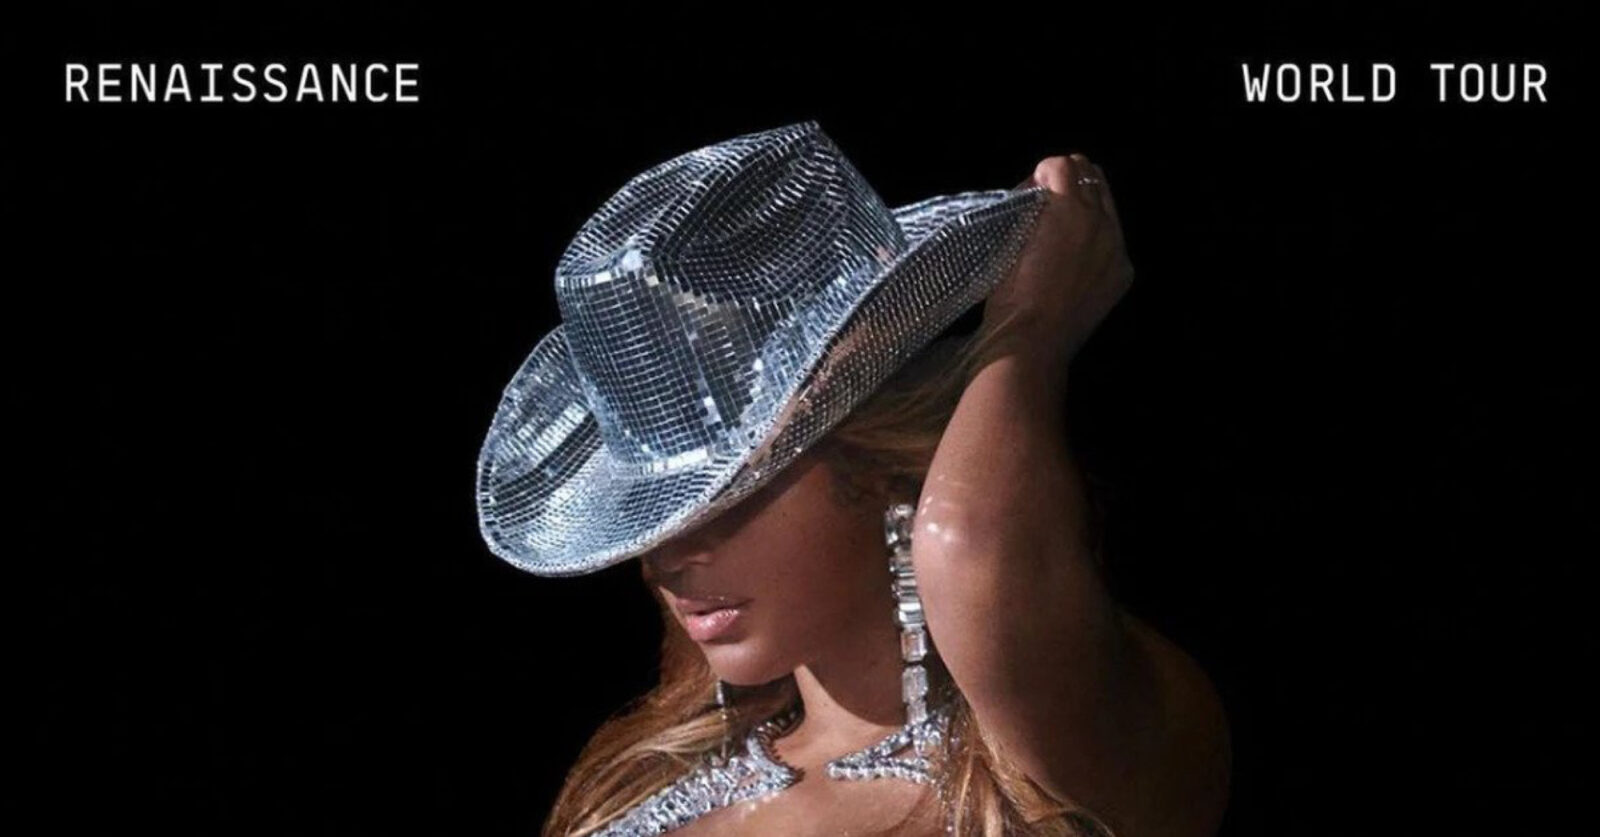 Beyoncé Renaissance World Tour comes to Edinburgh Lothian Buses